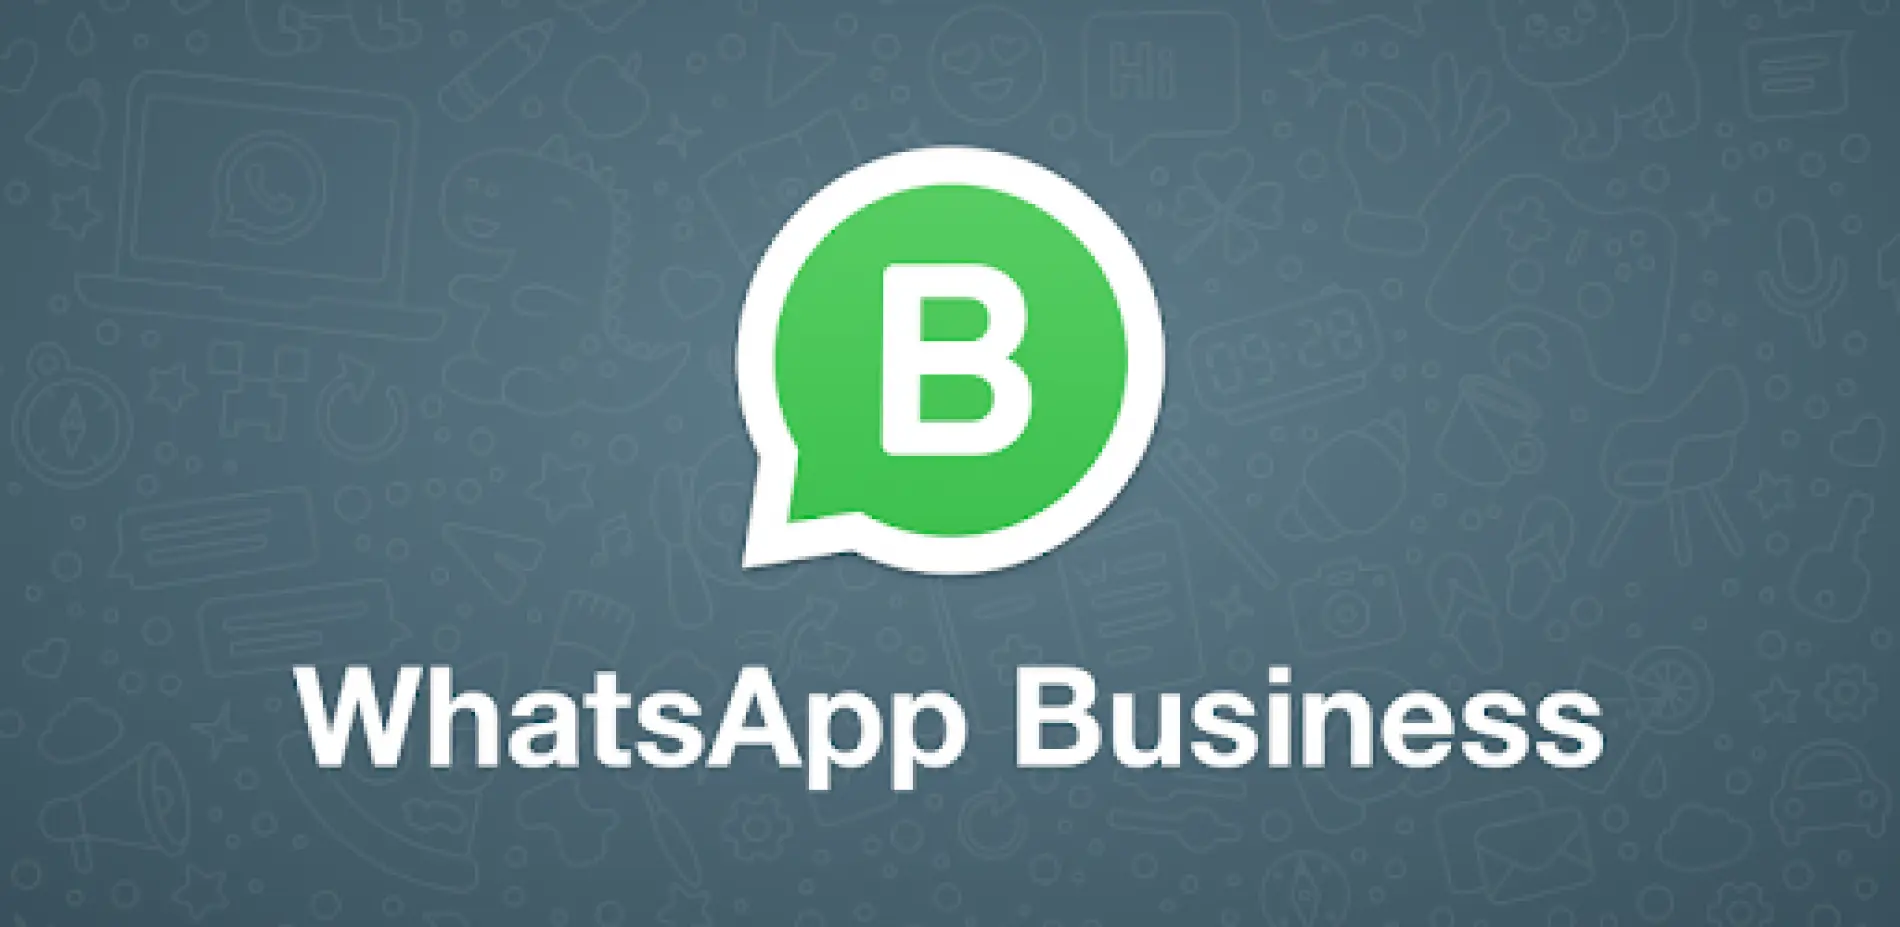 WhatsApp Business ya está disponible para iOS en México